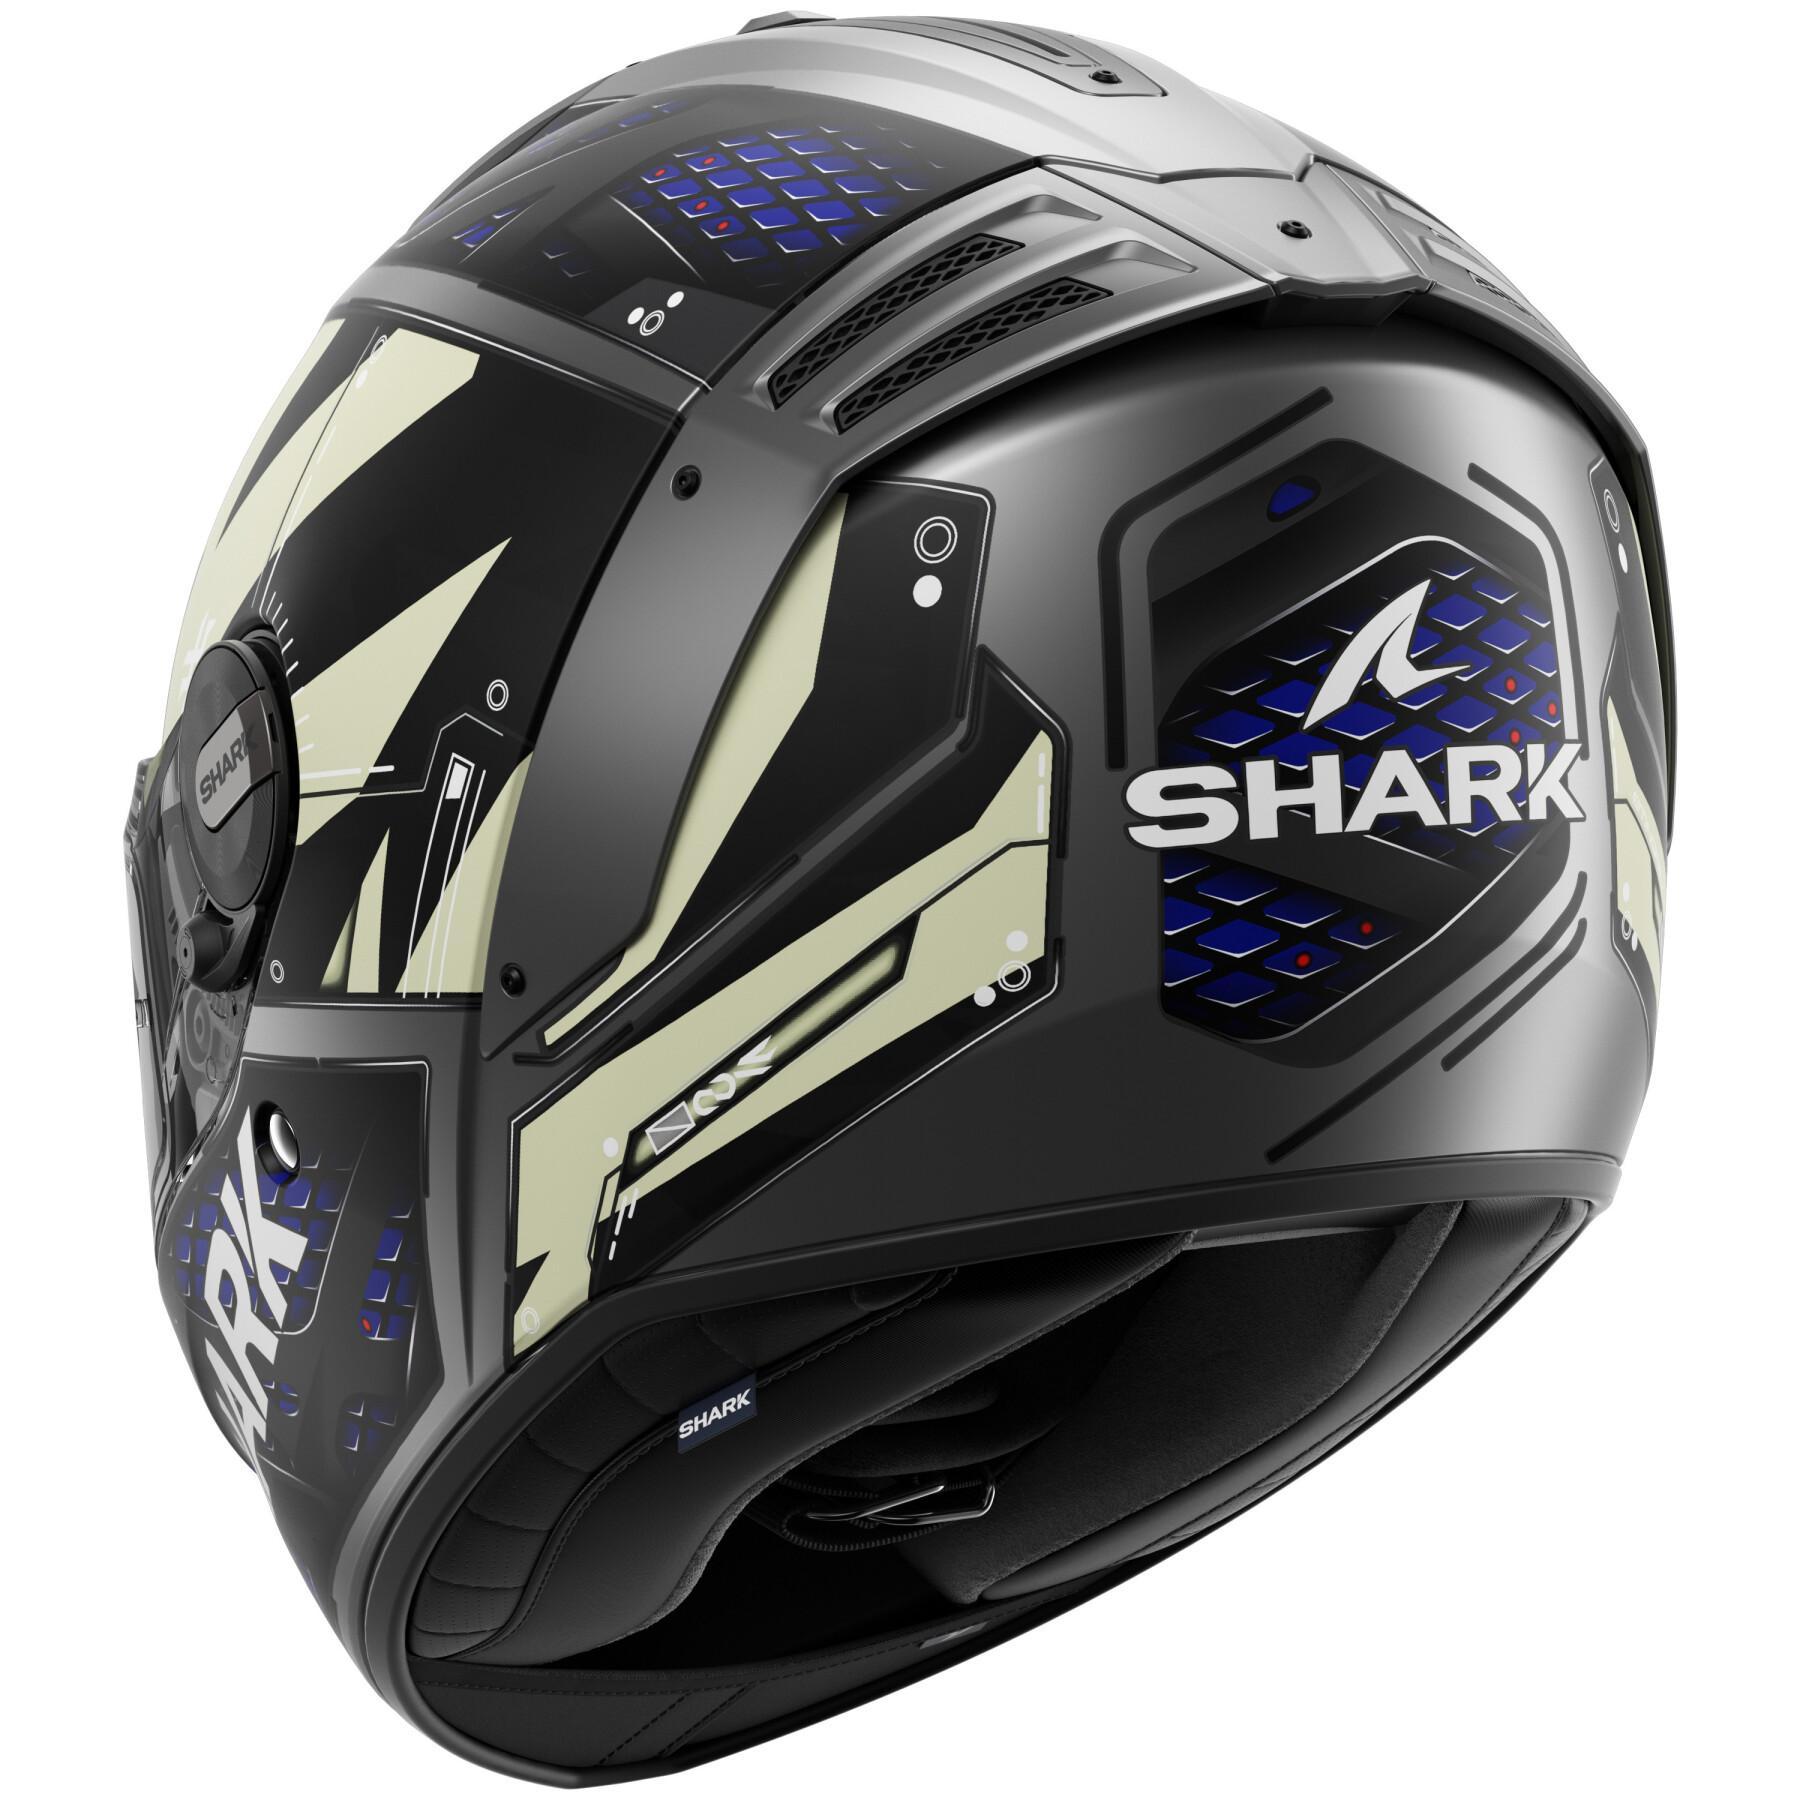 Full face motorcycle helmet Shark Spartan Rs Stingrey